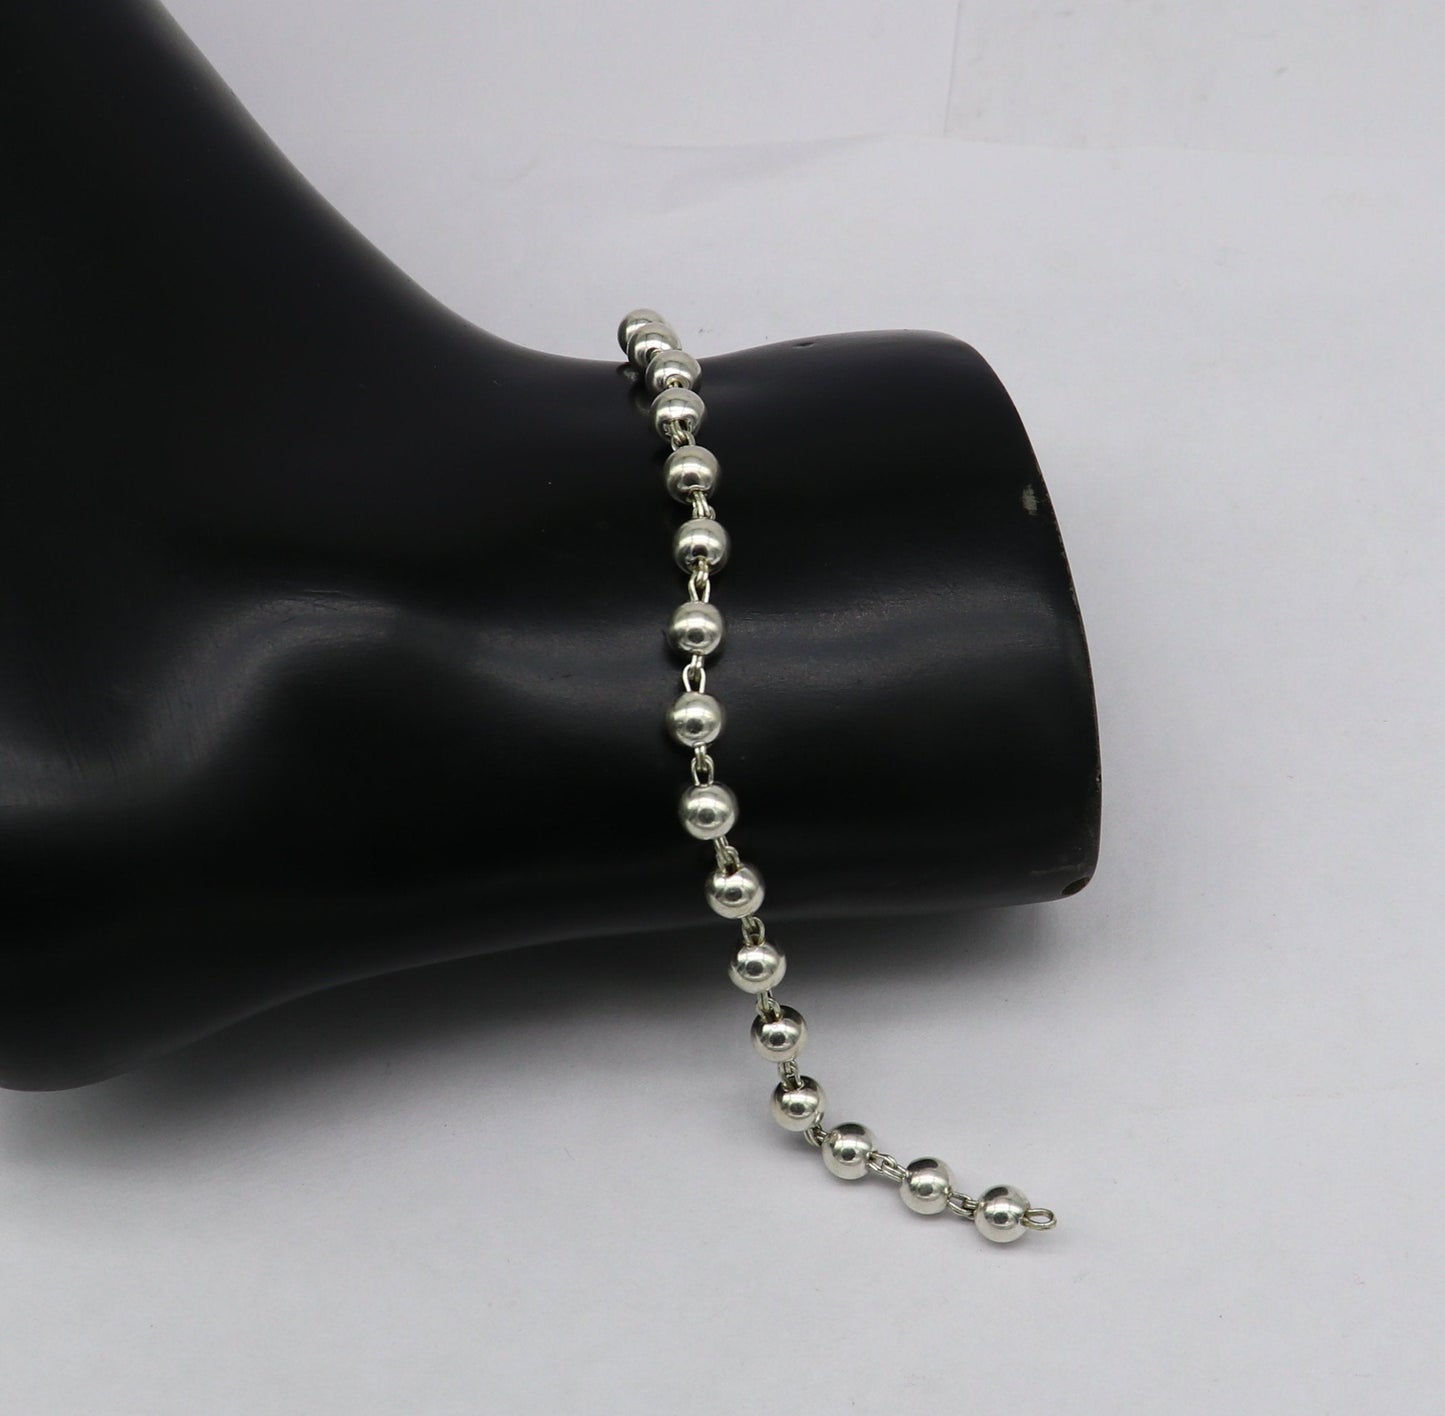 All sizes 925 sterling silver handmade 5.5 mm round beads balls unisex bracelet, fabulous customized 8 inches long beaded bracelet stylish gift sbr211 - TRIBAL ORNAMENTS